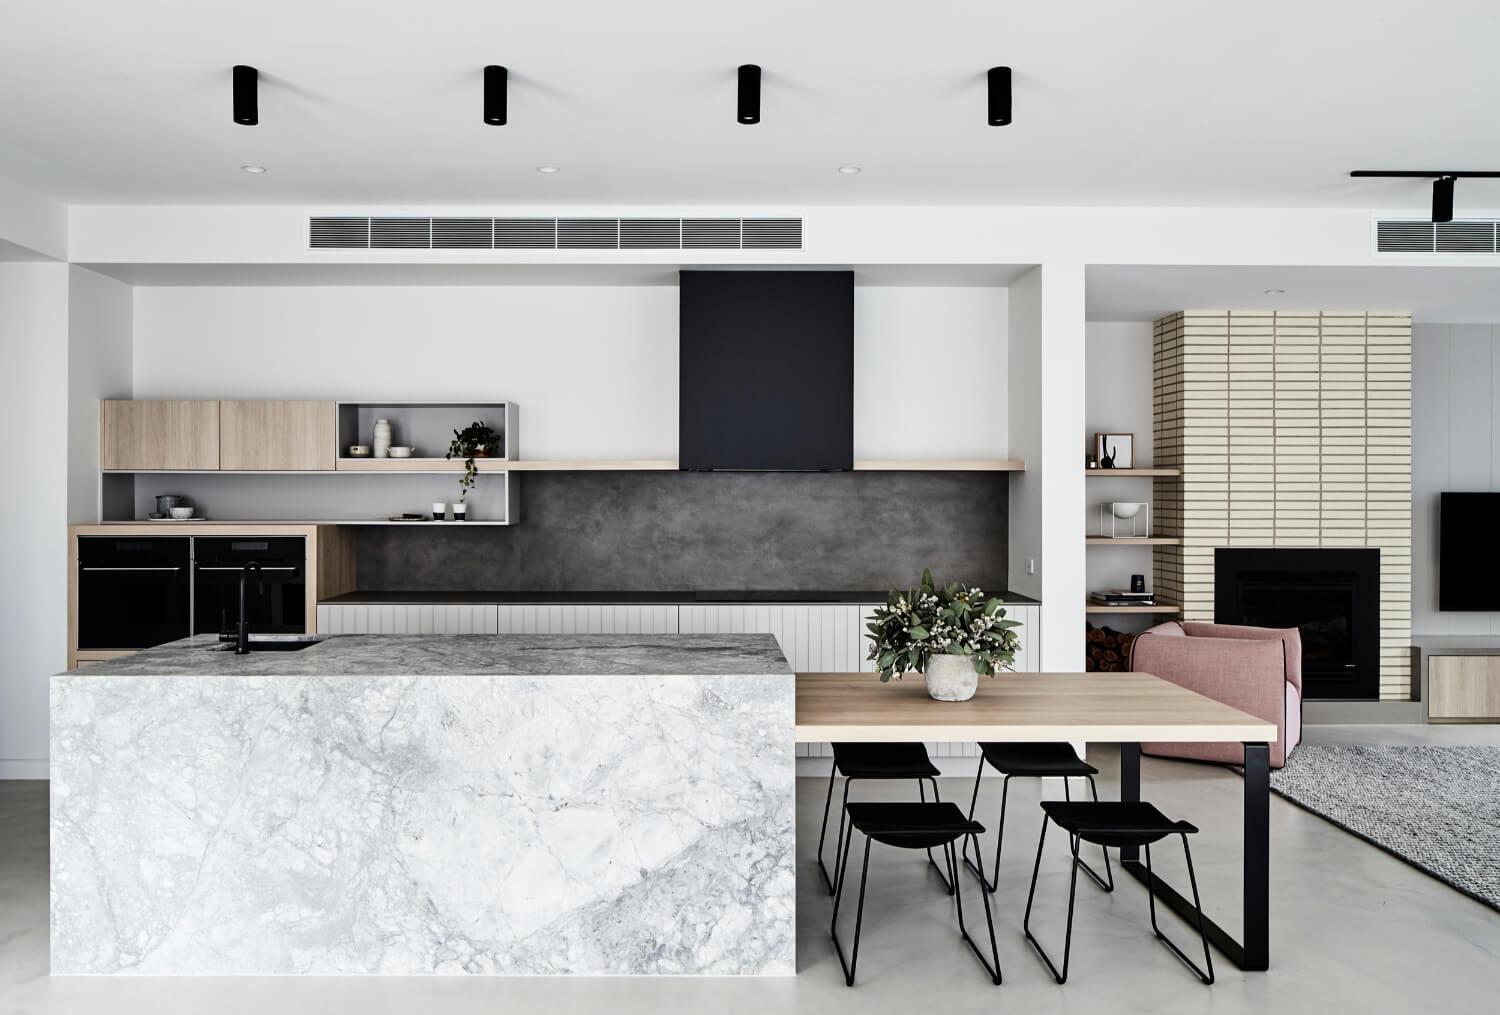 Thomas Archer's Landmark Custom Design kitchen featured in Home Beautiful magazine